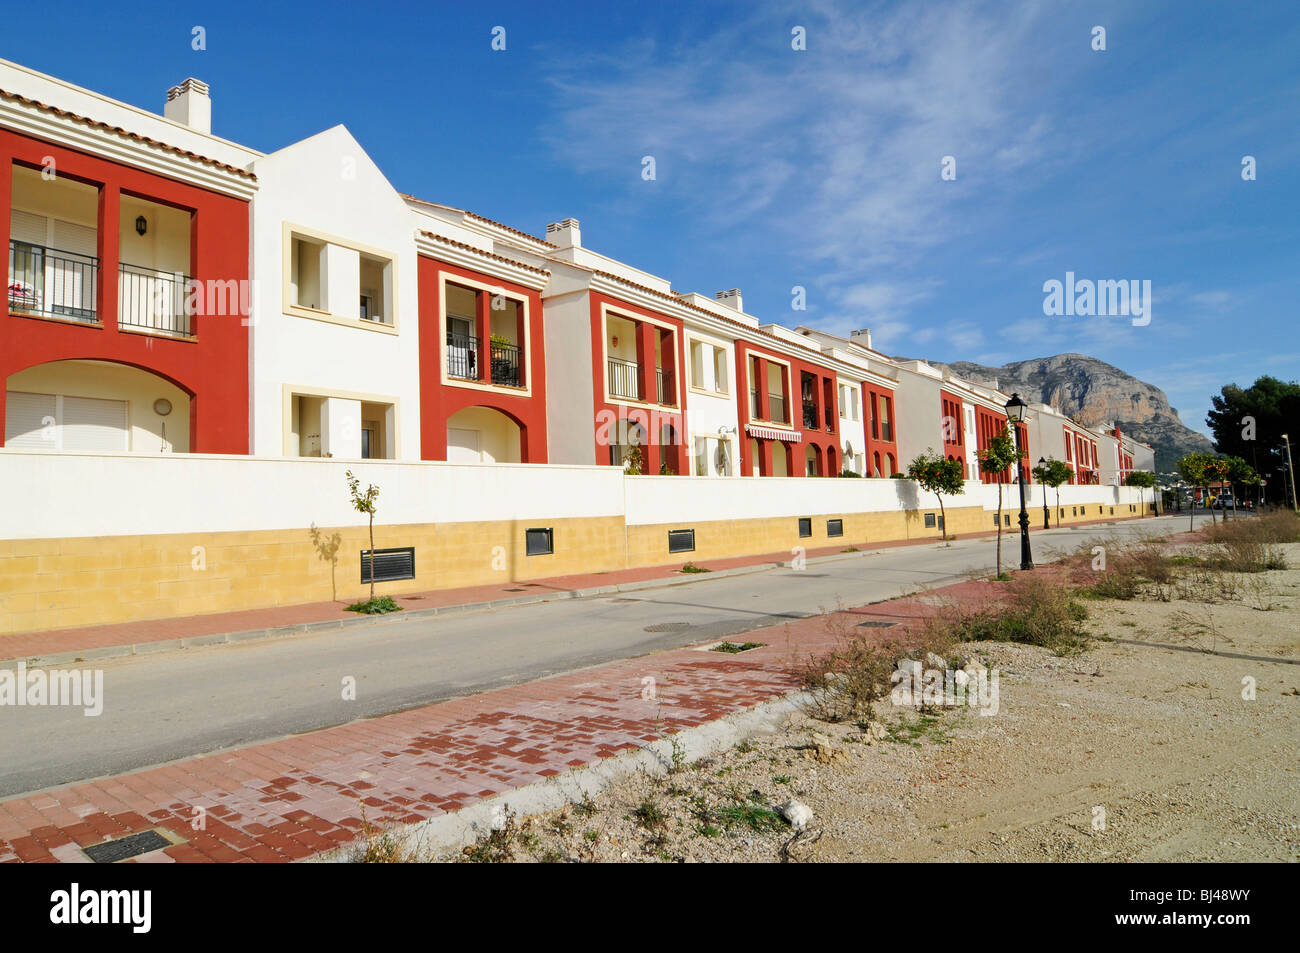 Colorful row houses, street, residential neighbourhood, village Jesus Pobre, Javea, Costa Blanca, Alicante province, Spain, Eur Stock Photo